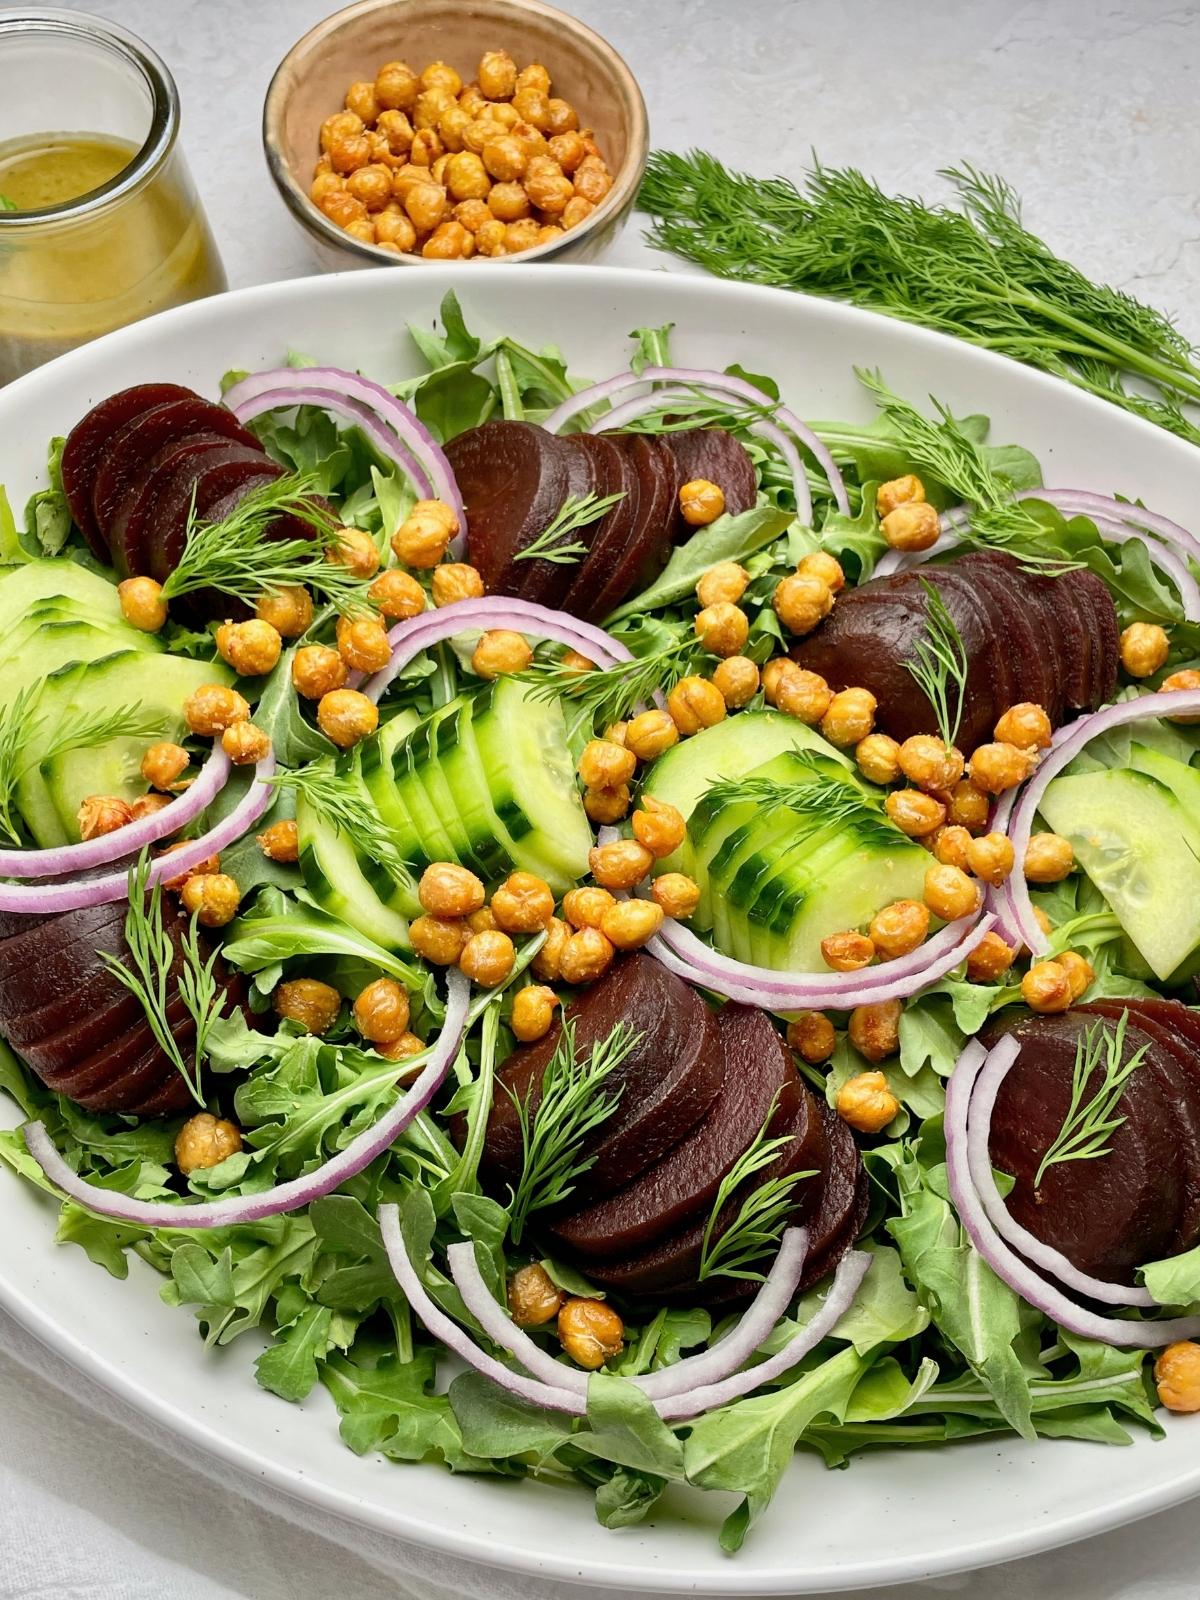 Beet salad with chickpeas.